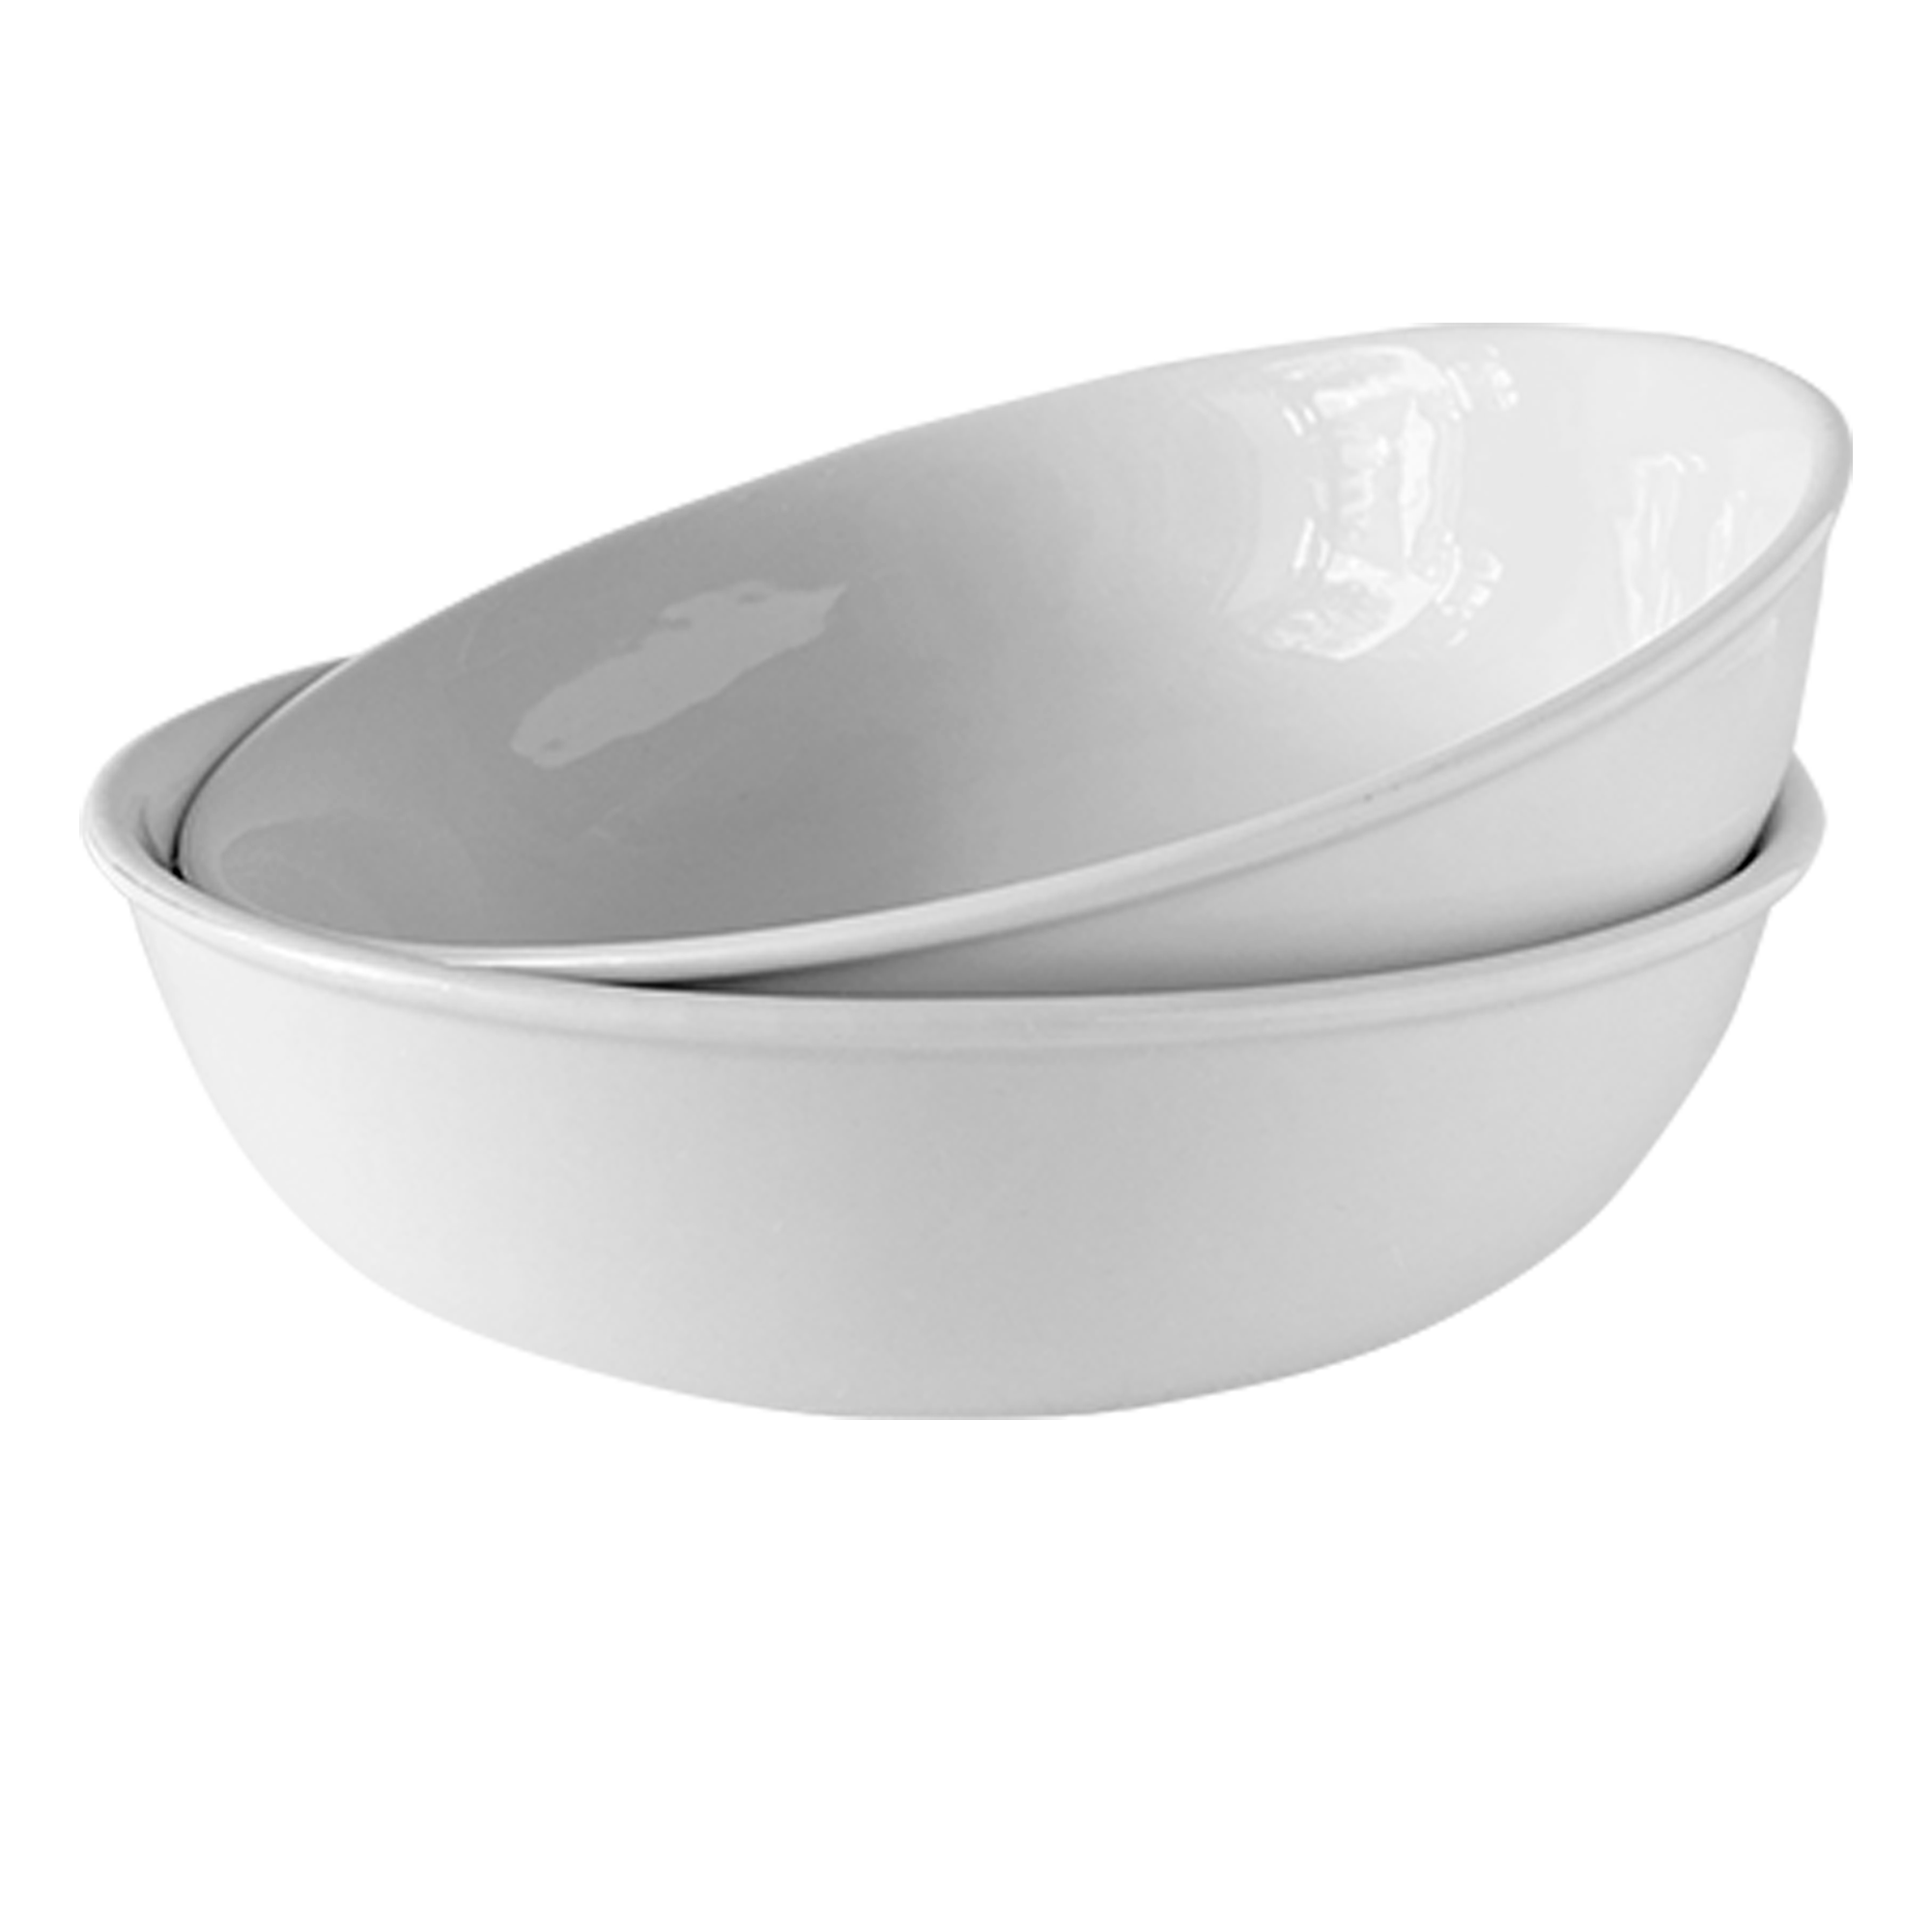 KAY bowl